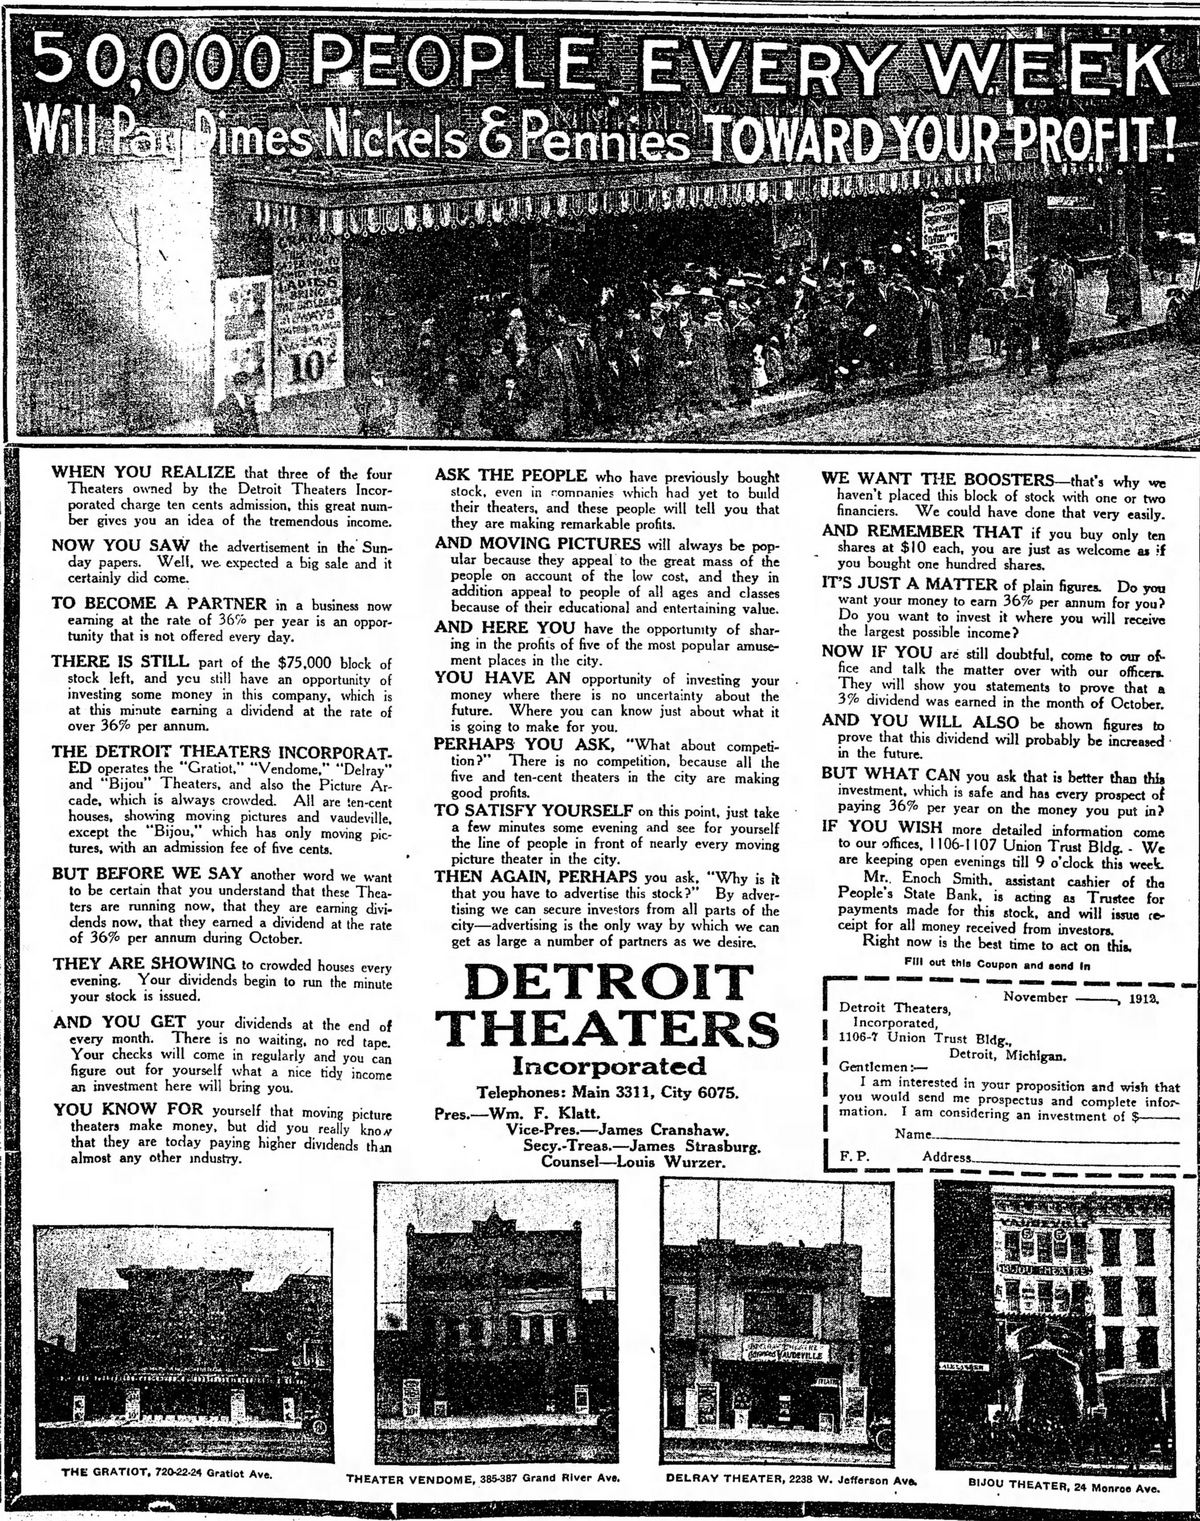 November 1912 ad Gratiot Theatre, Detroit